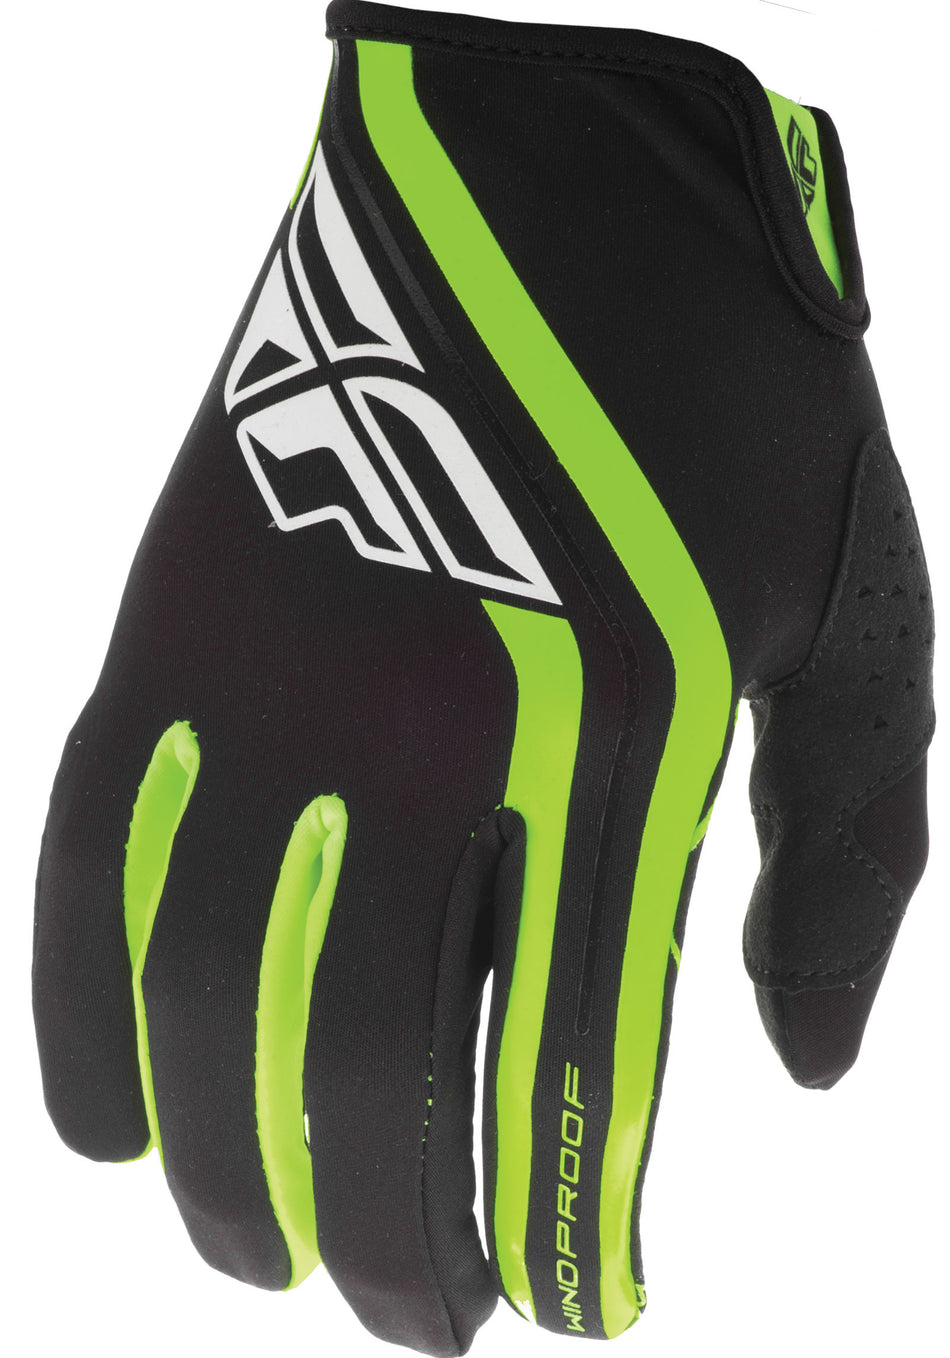 FLY RACING Windproof Gloves Black/Hi-Vis Sz 11 371-14911